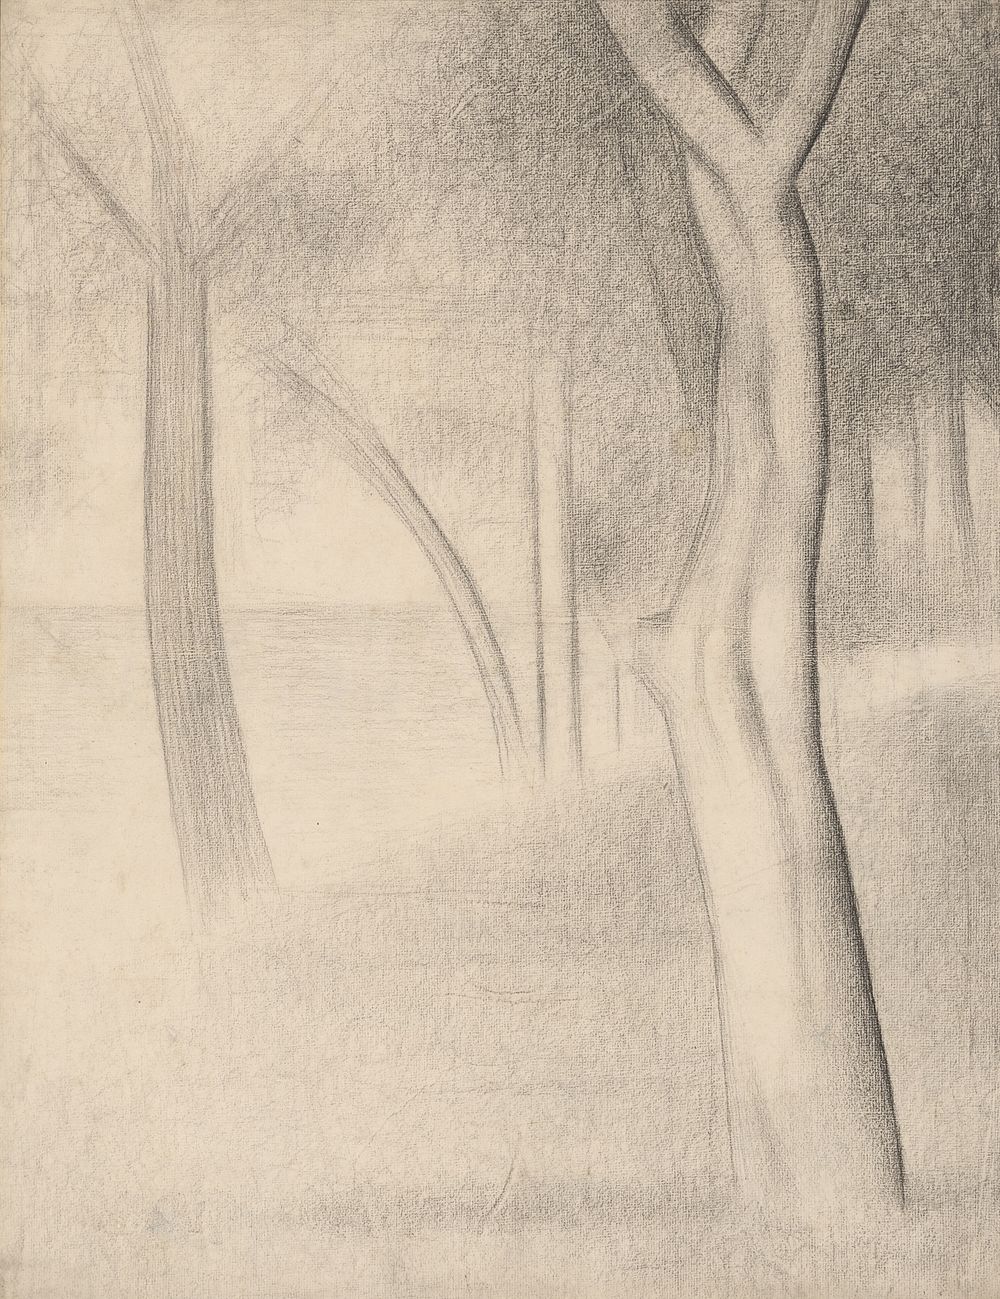 Trees (study for La Grande Jatte) by Georges Seurat